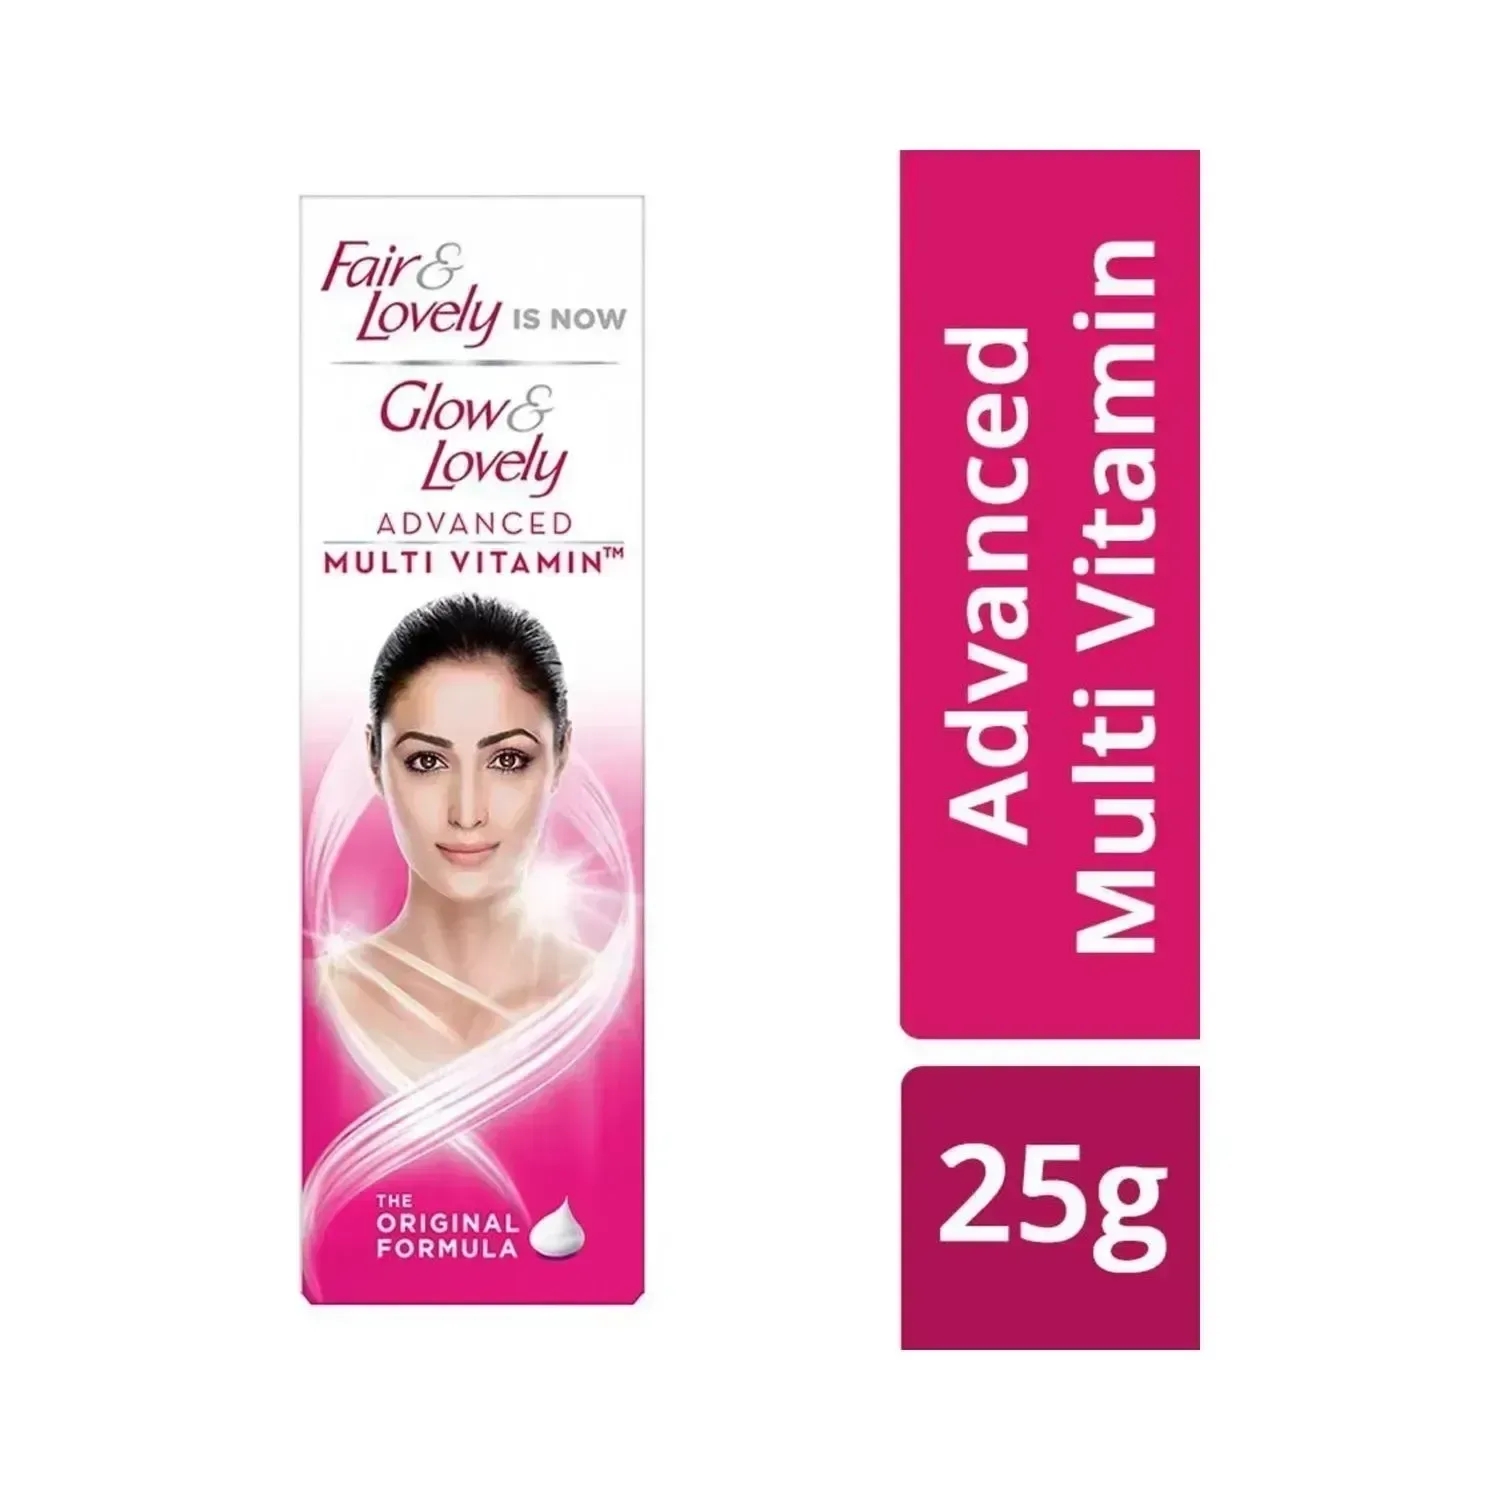 Glow & Lovely | Glow & Lovely Advanced Multivitamin Face Cream (25g)